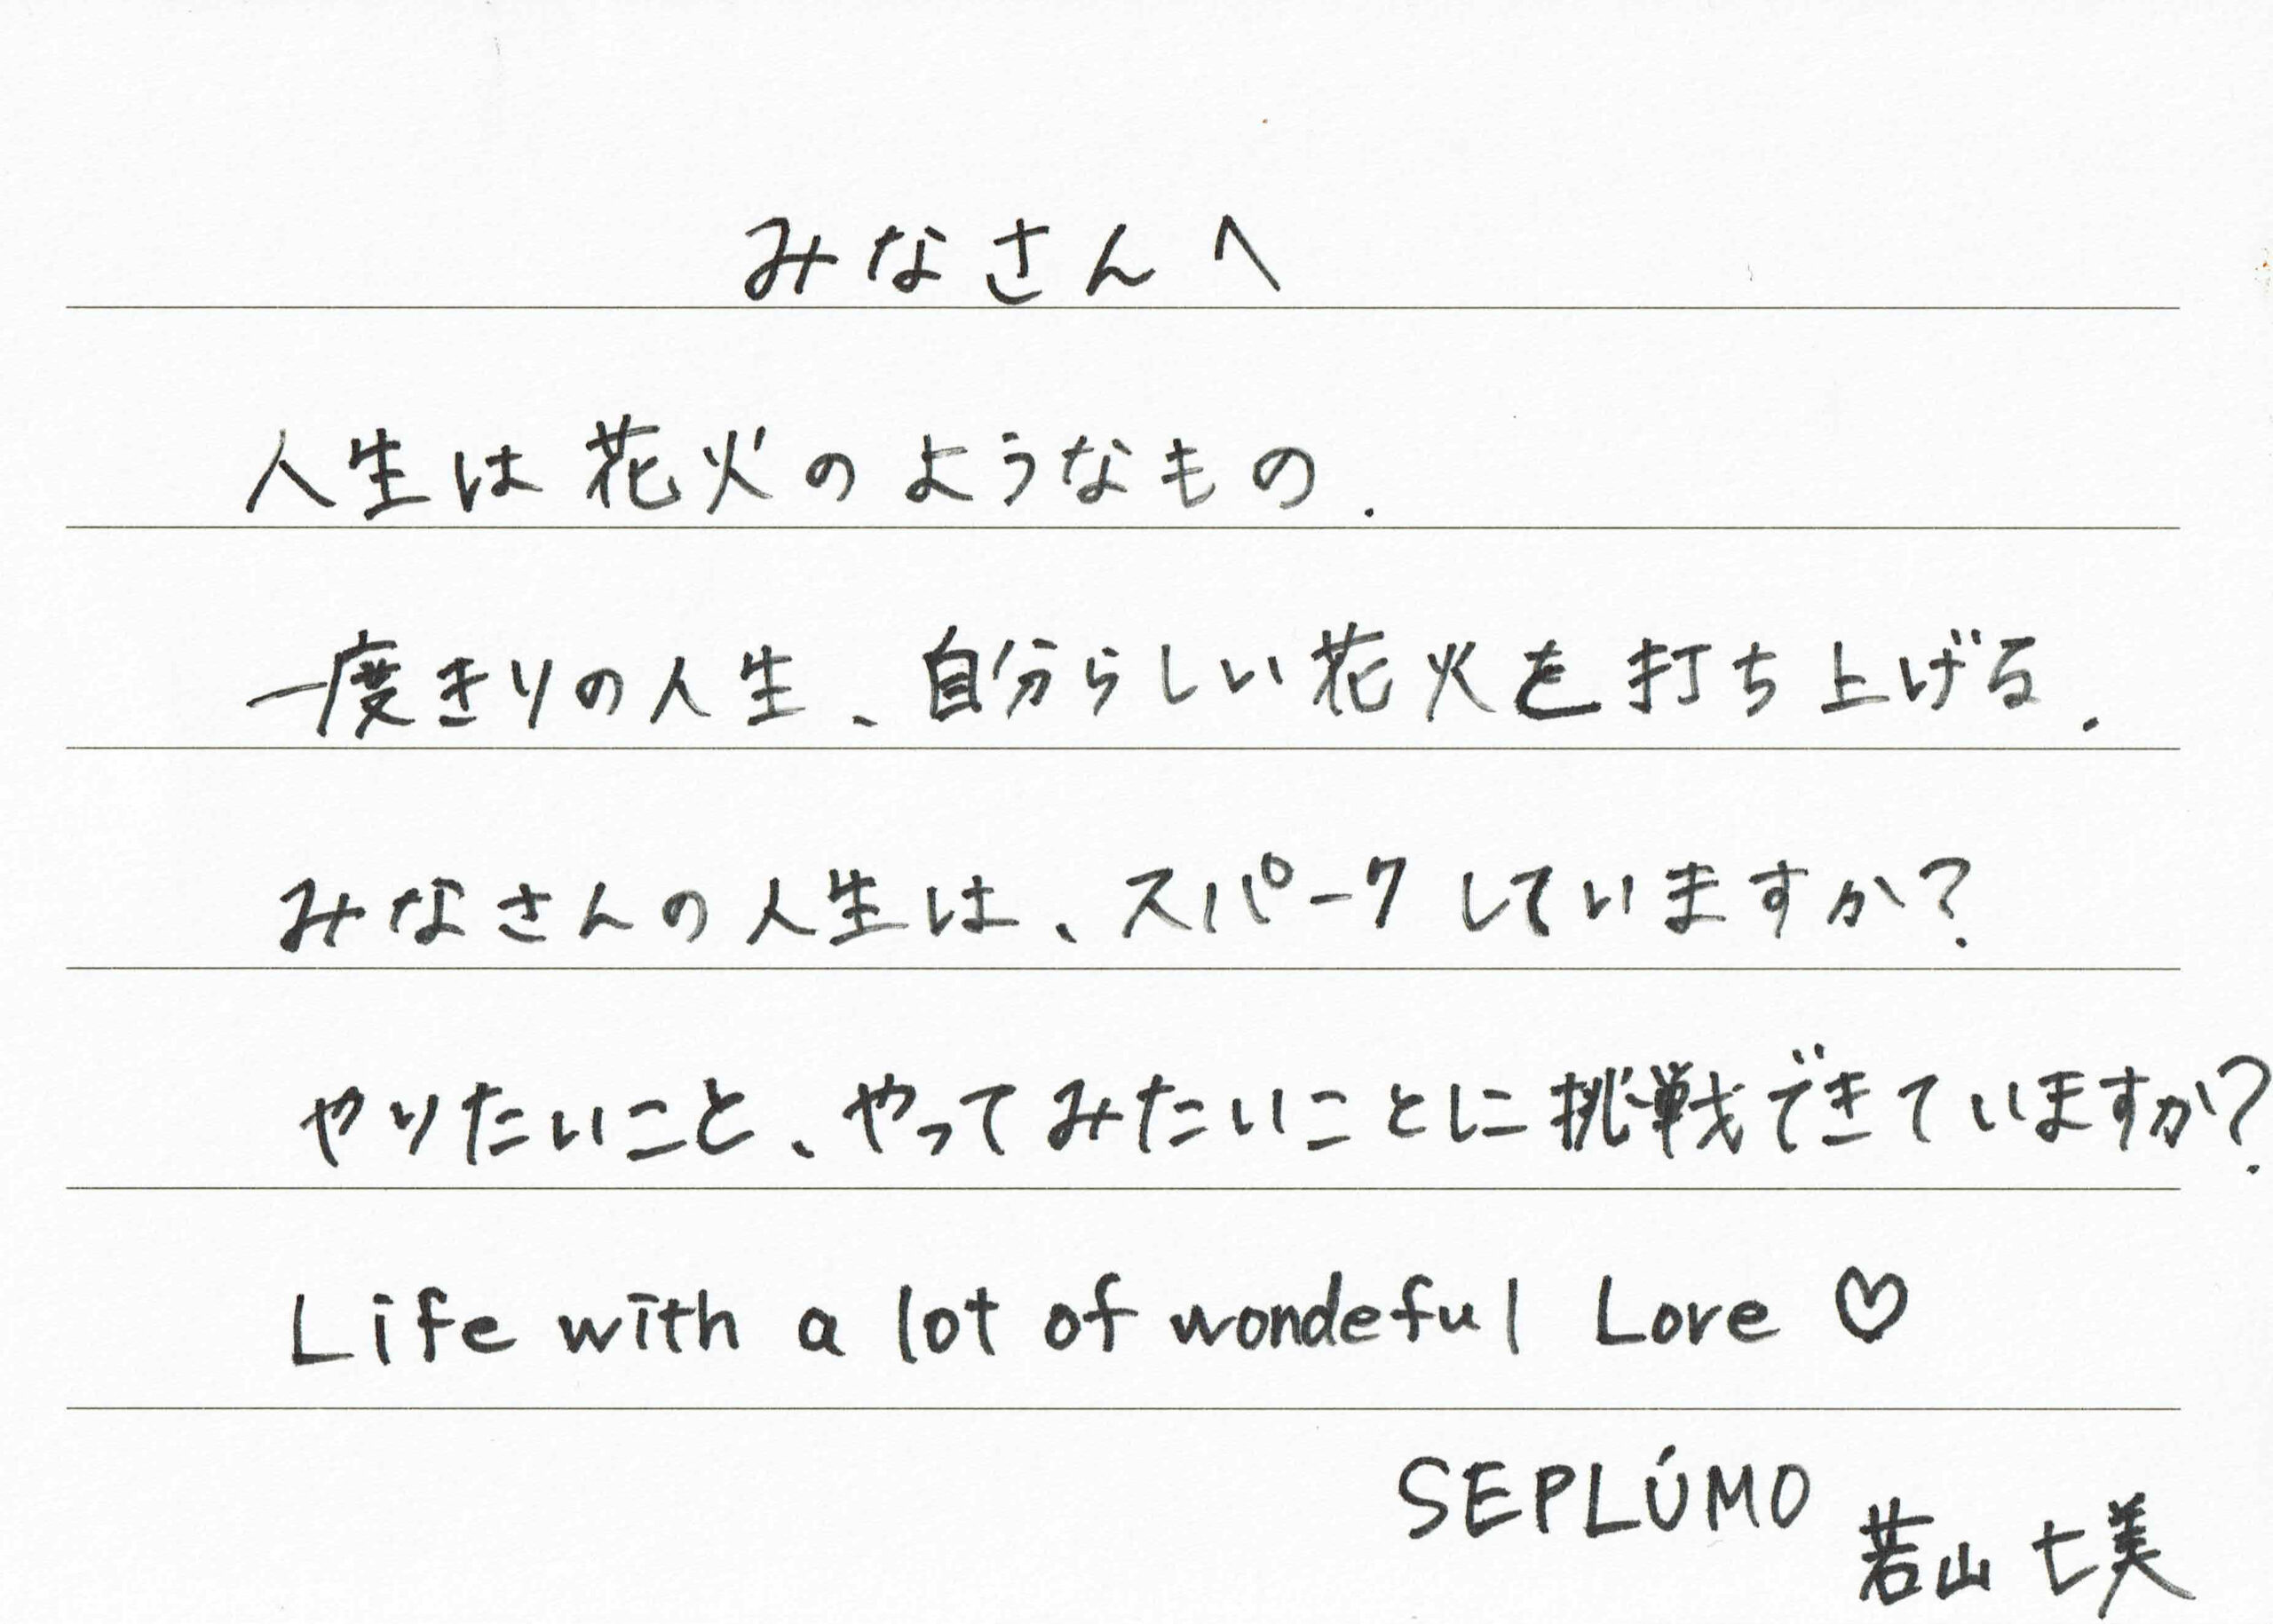 Seplúmoからの手紙